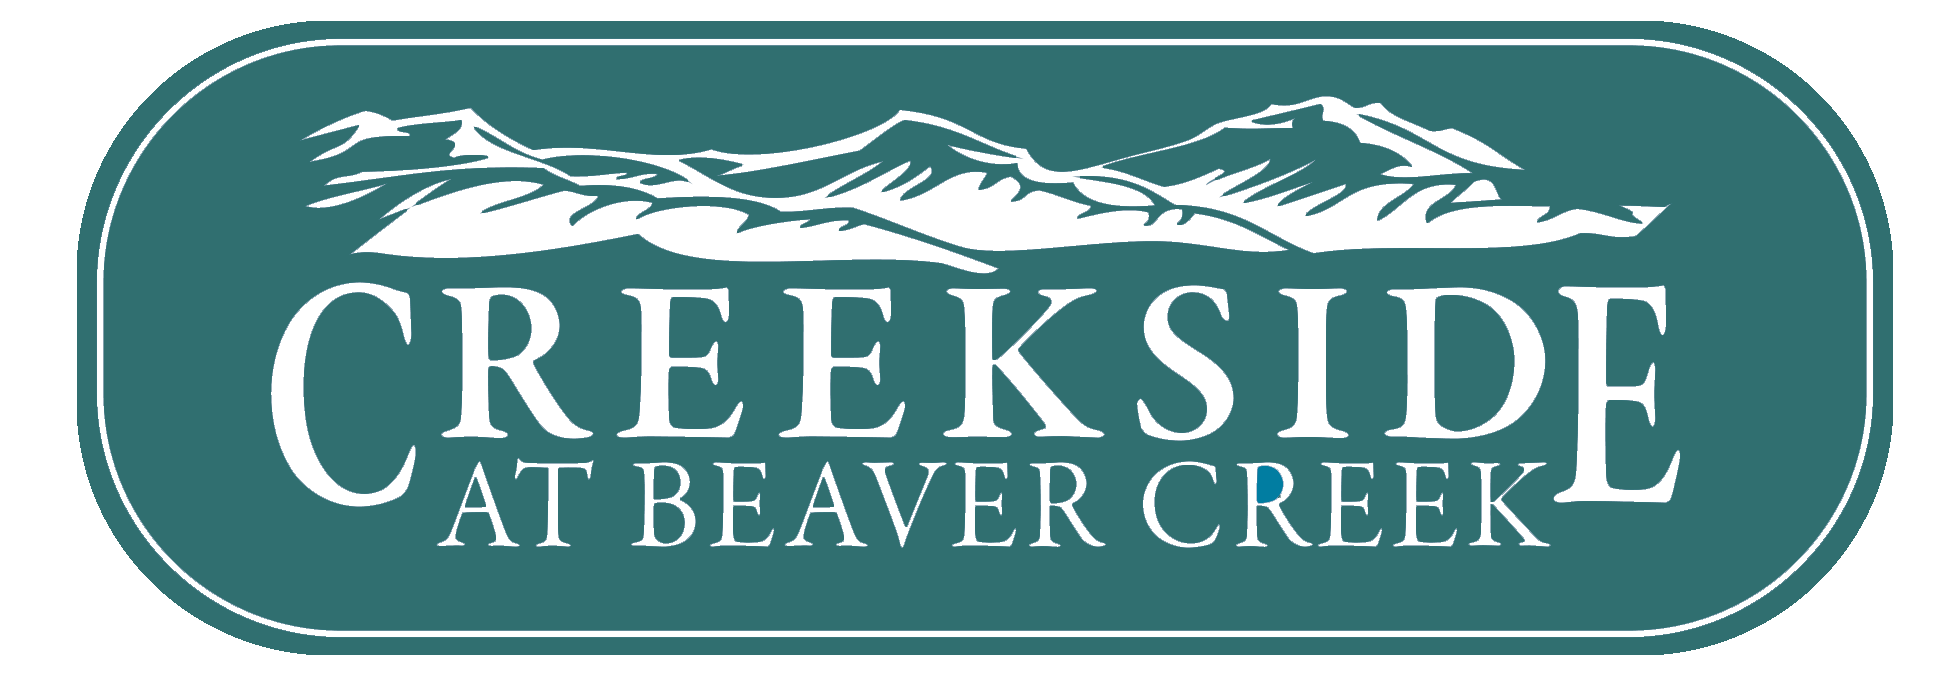 Creekside Beaver Creek